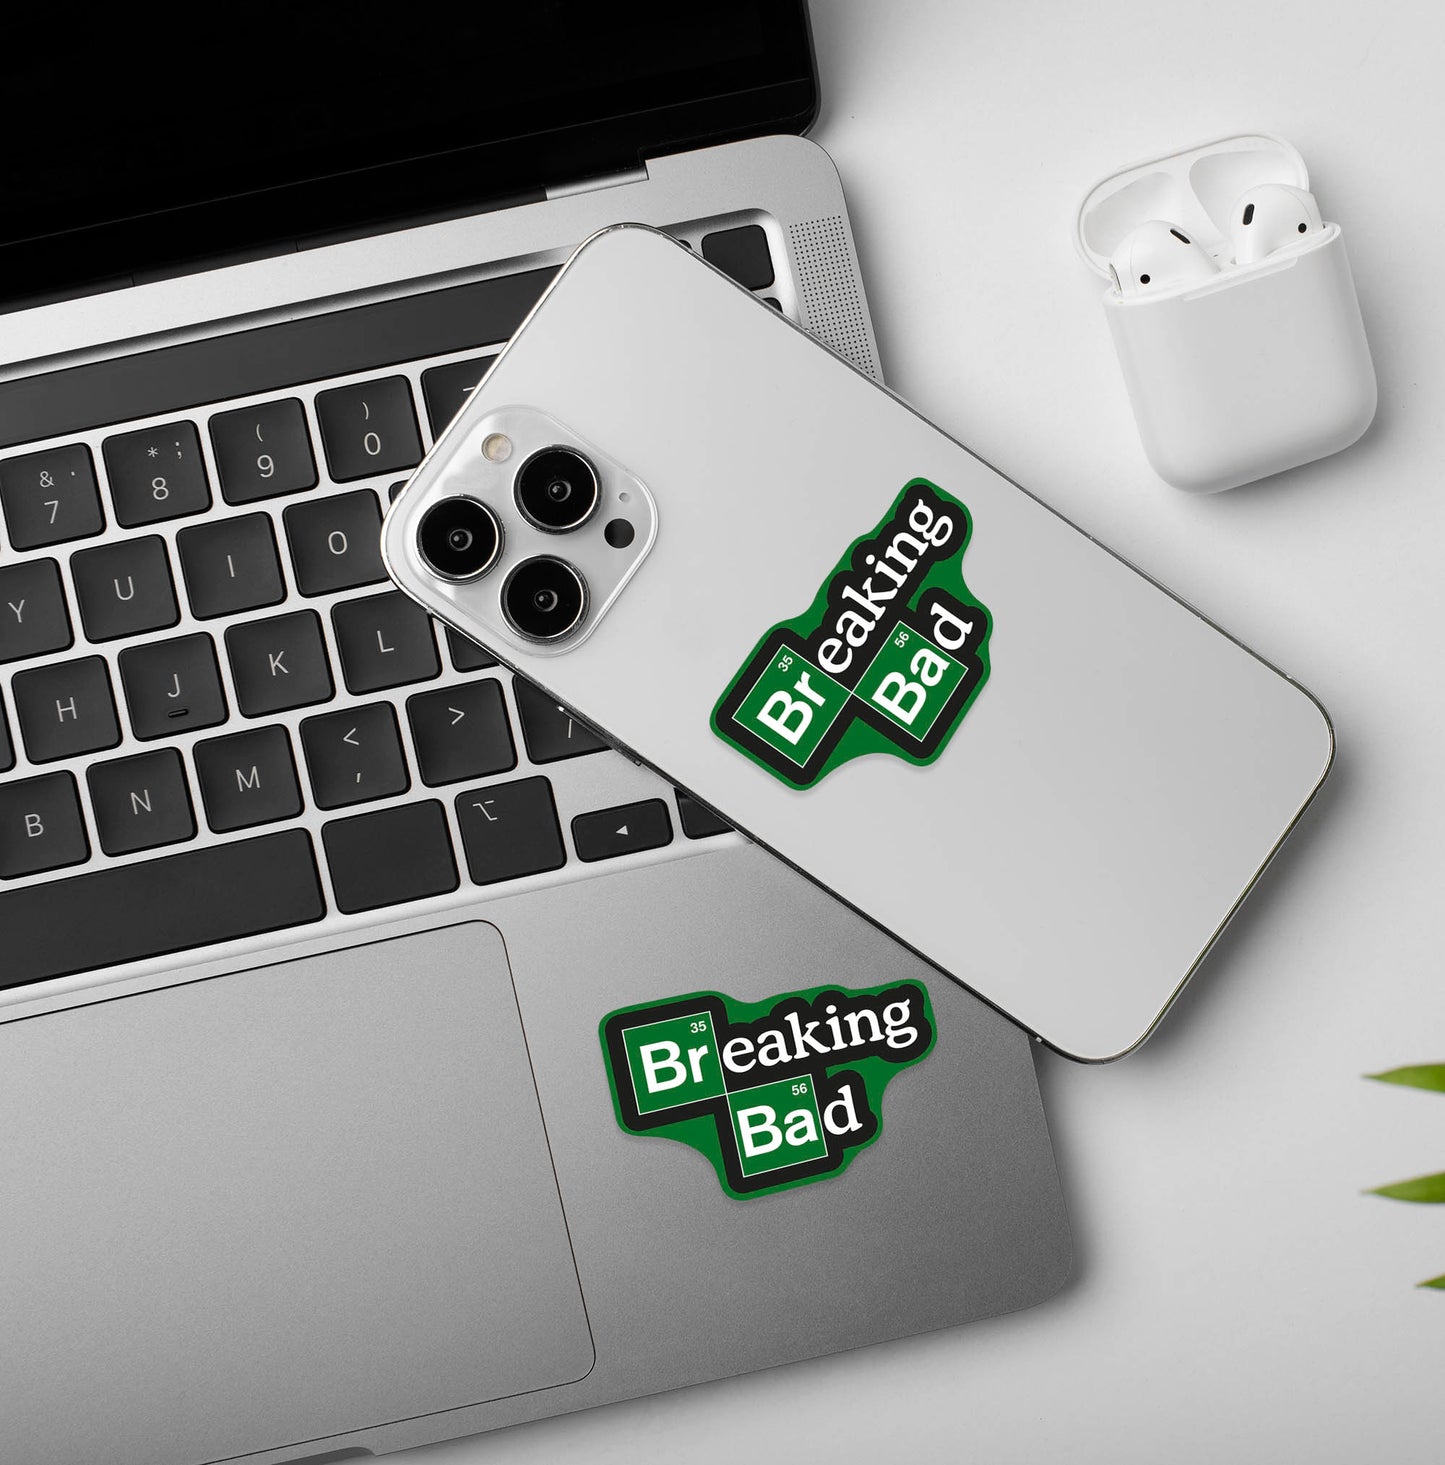 Breaking Bad Name - Laptop / Mobile Sticker